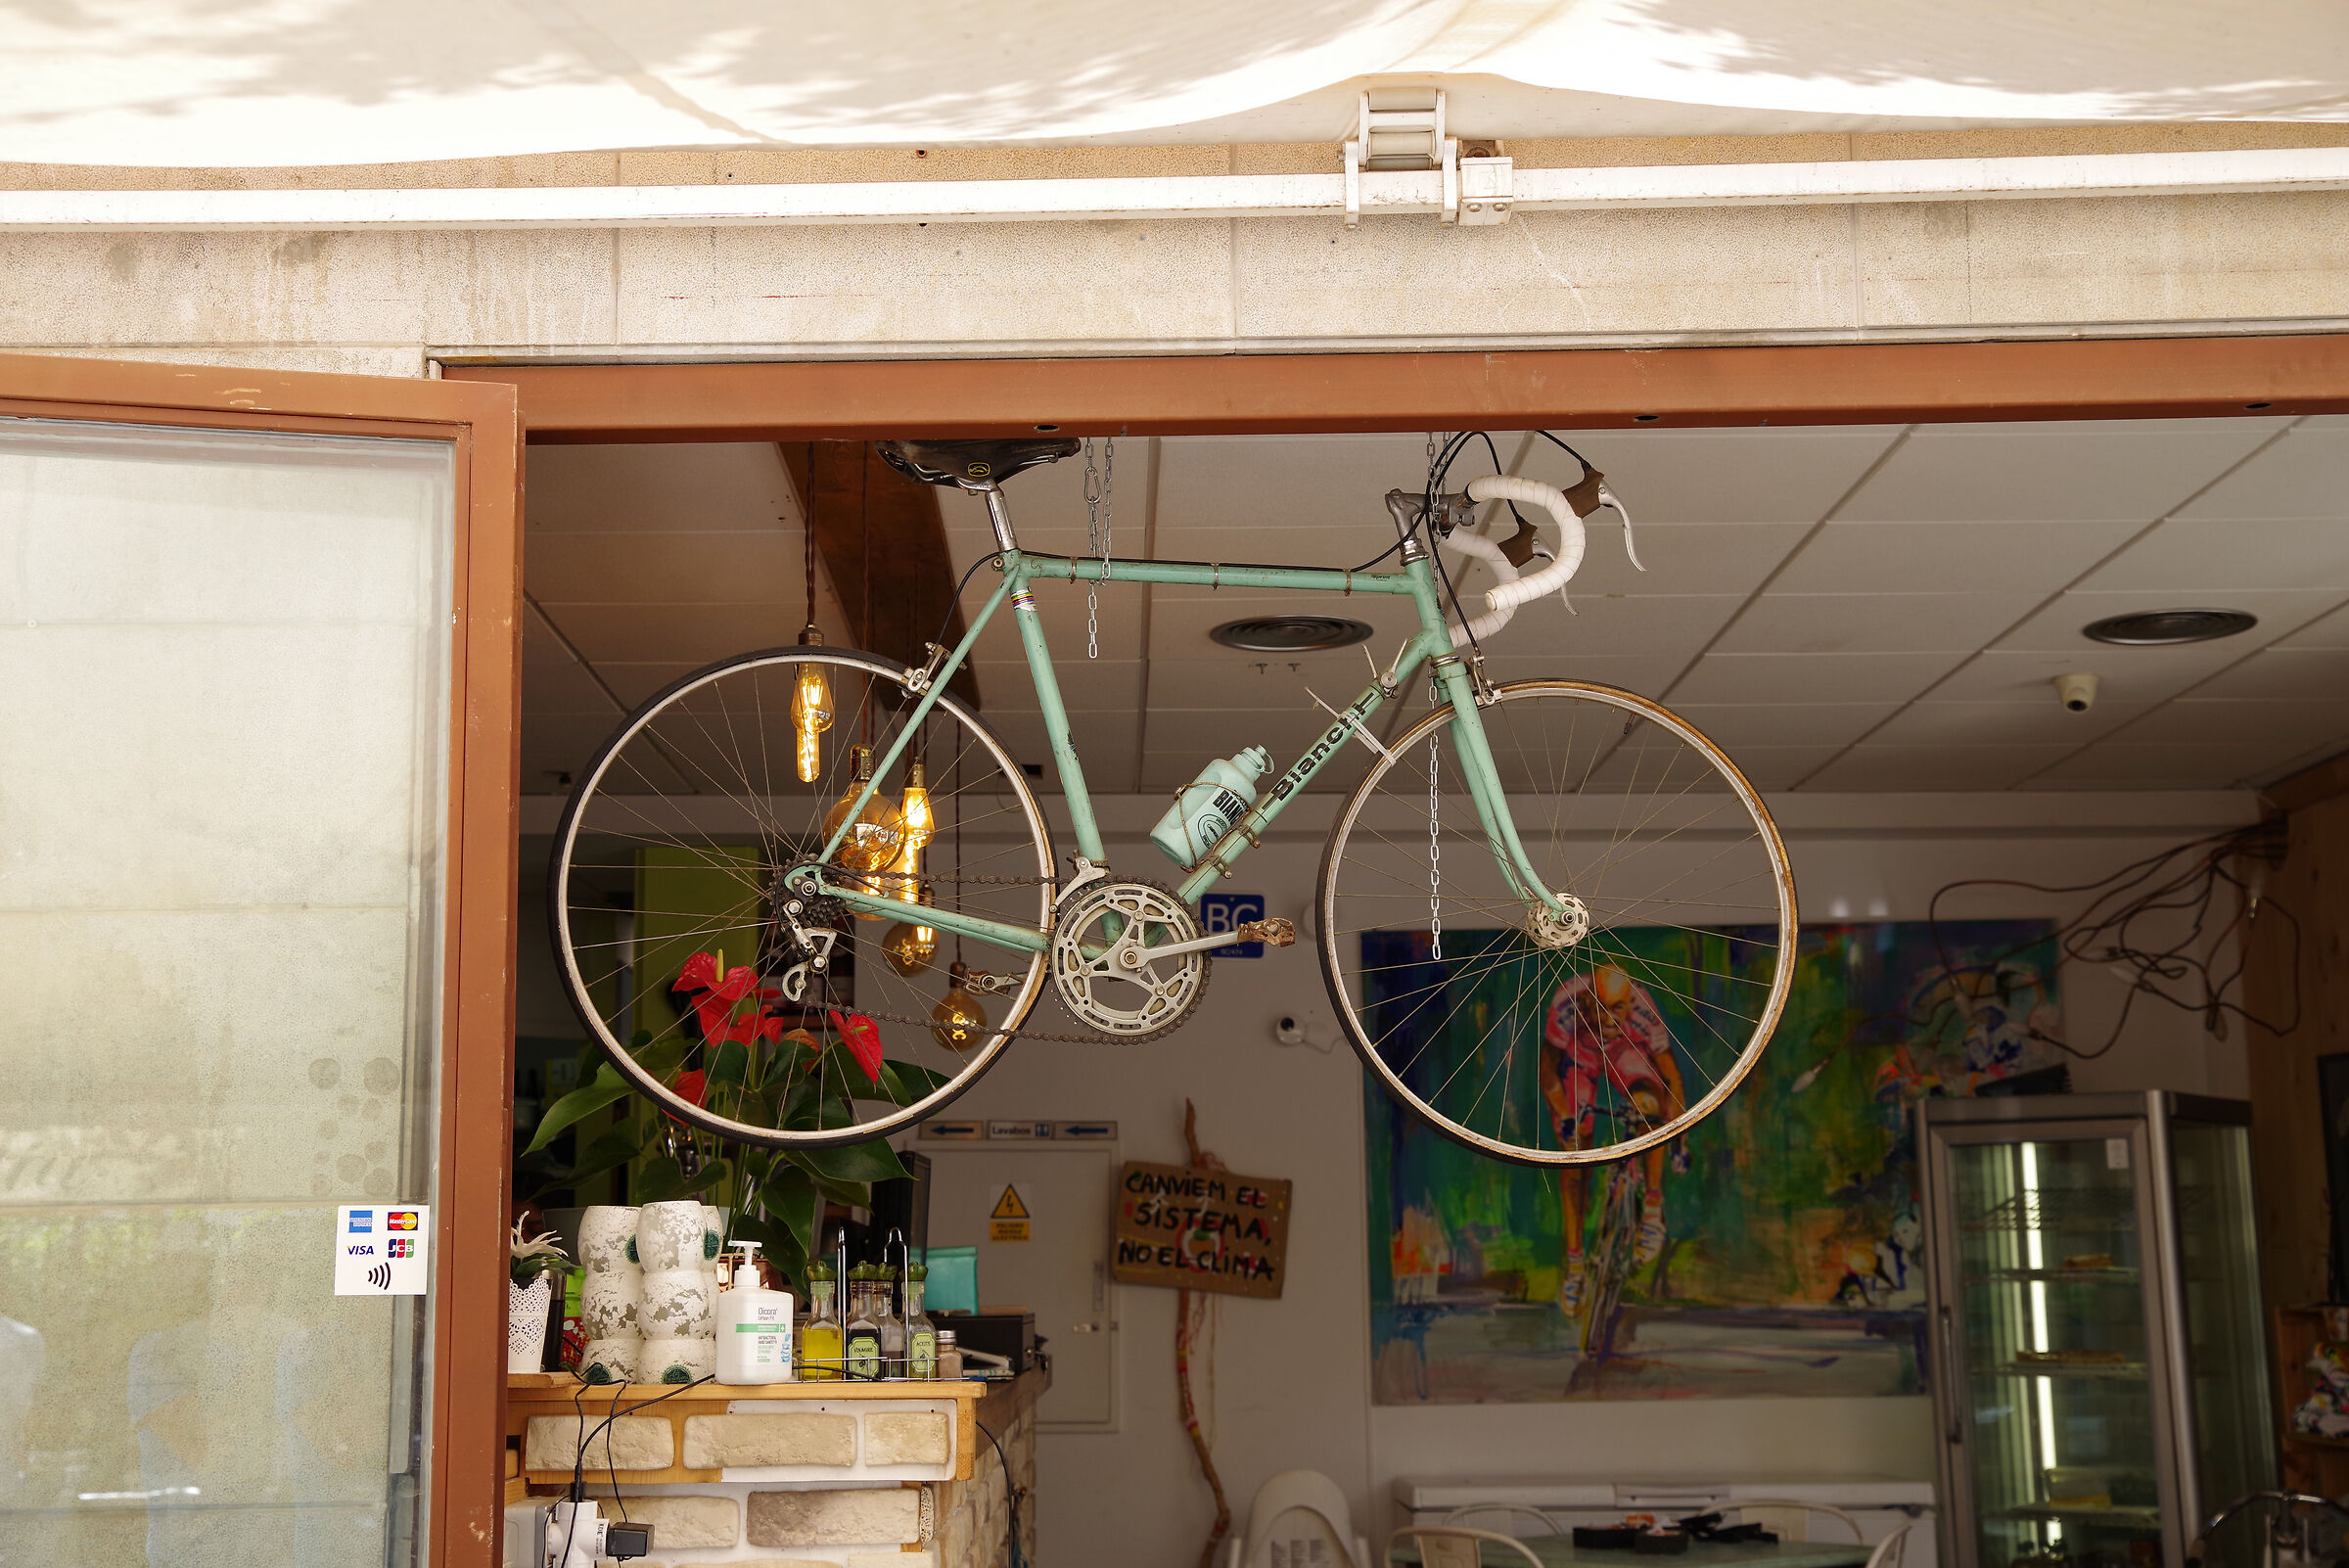 The hanging bike...